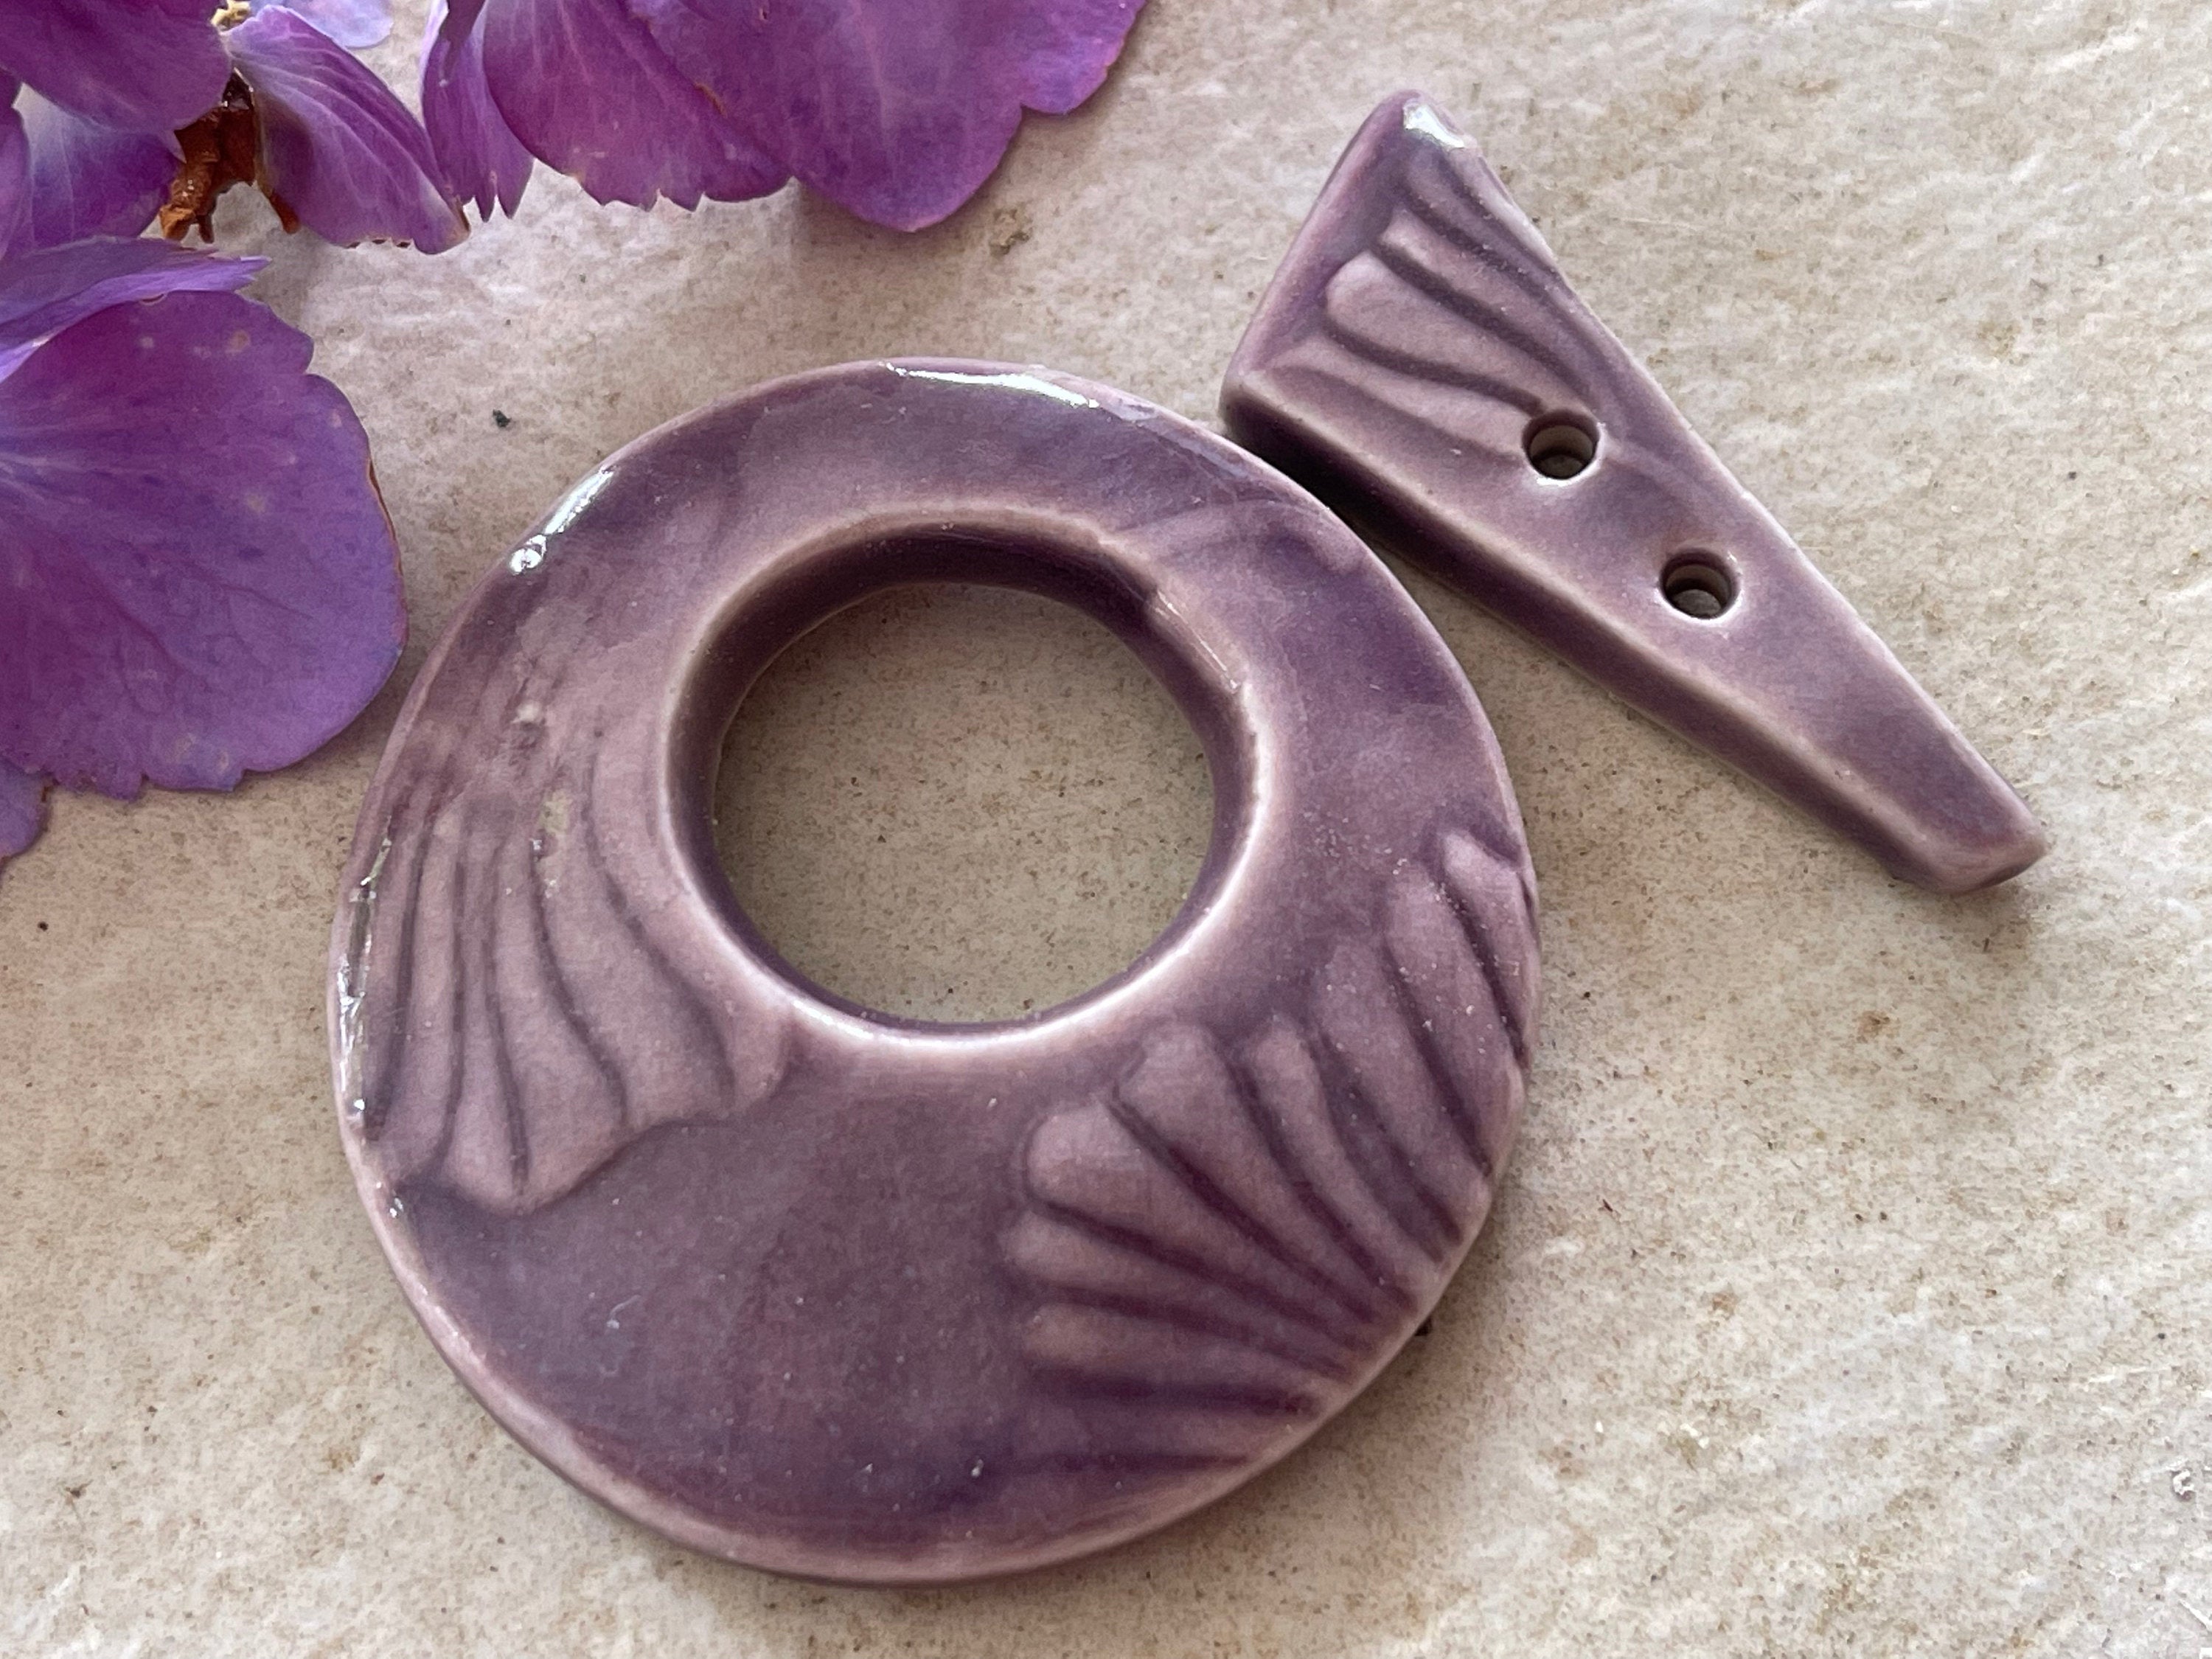 Toggle Clasp, Ceramic Toggle, Purple Toggle, Floral Toggle, Ginkgo Clasp, Jewelry Component, DIY jewelry